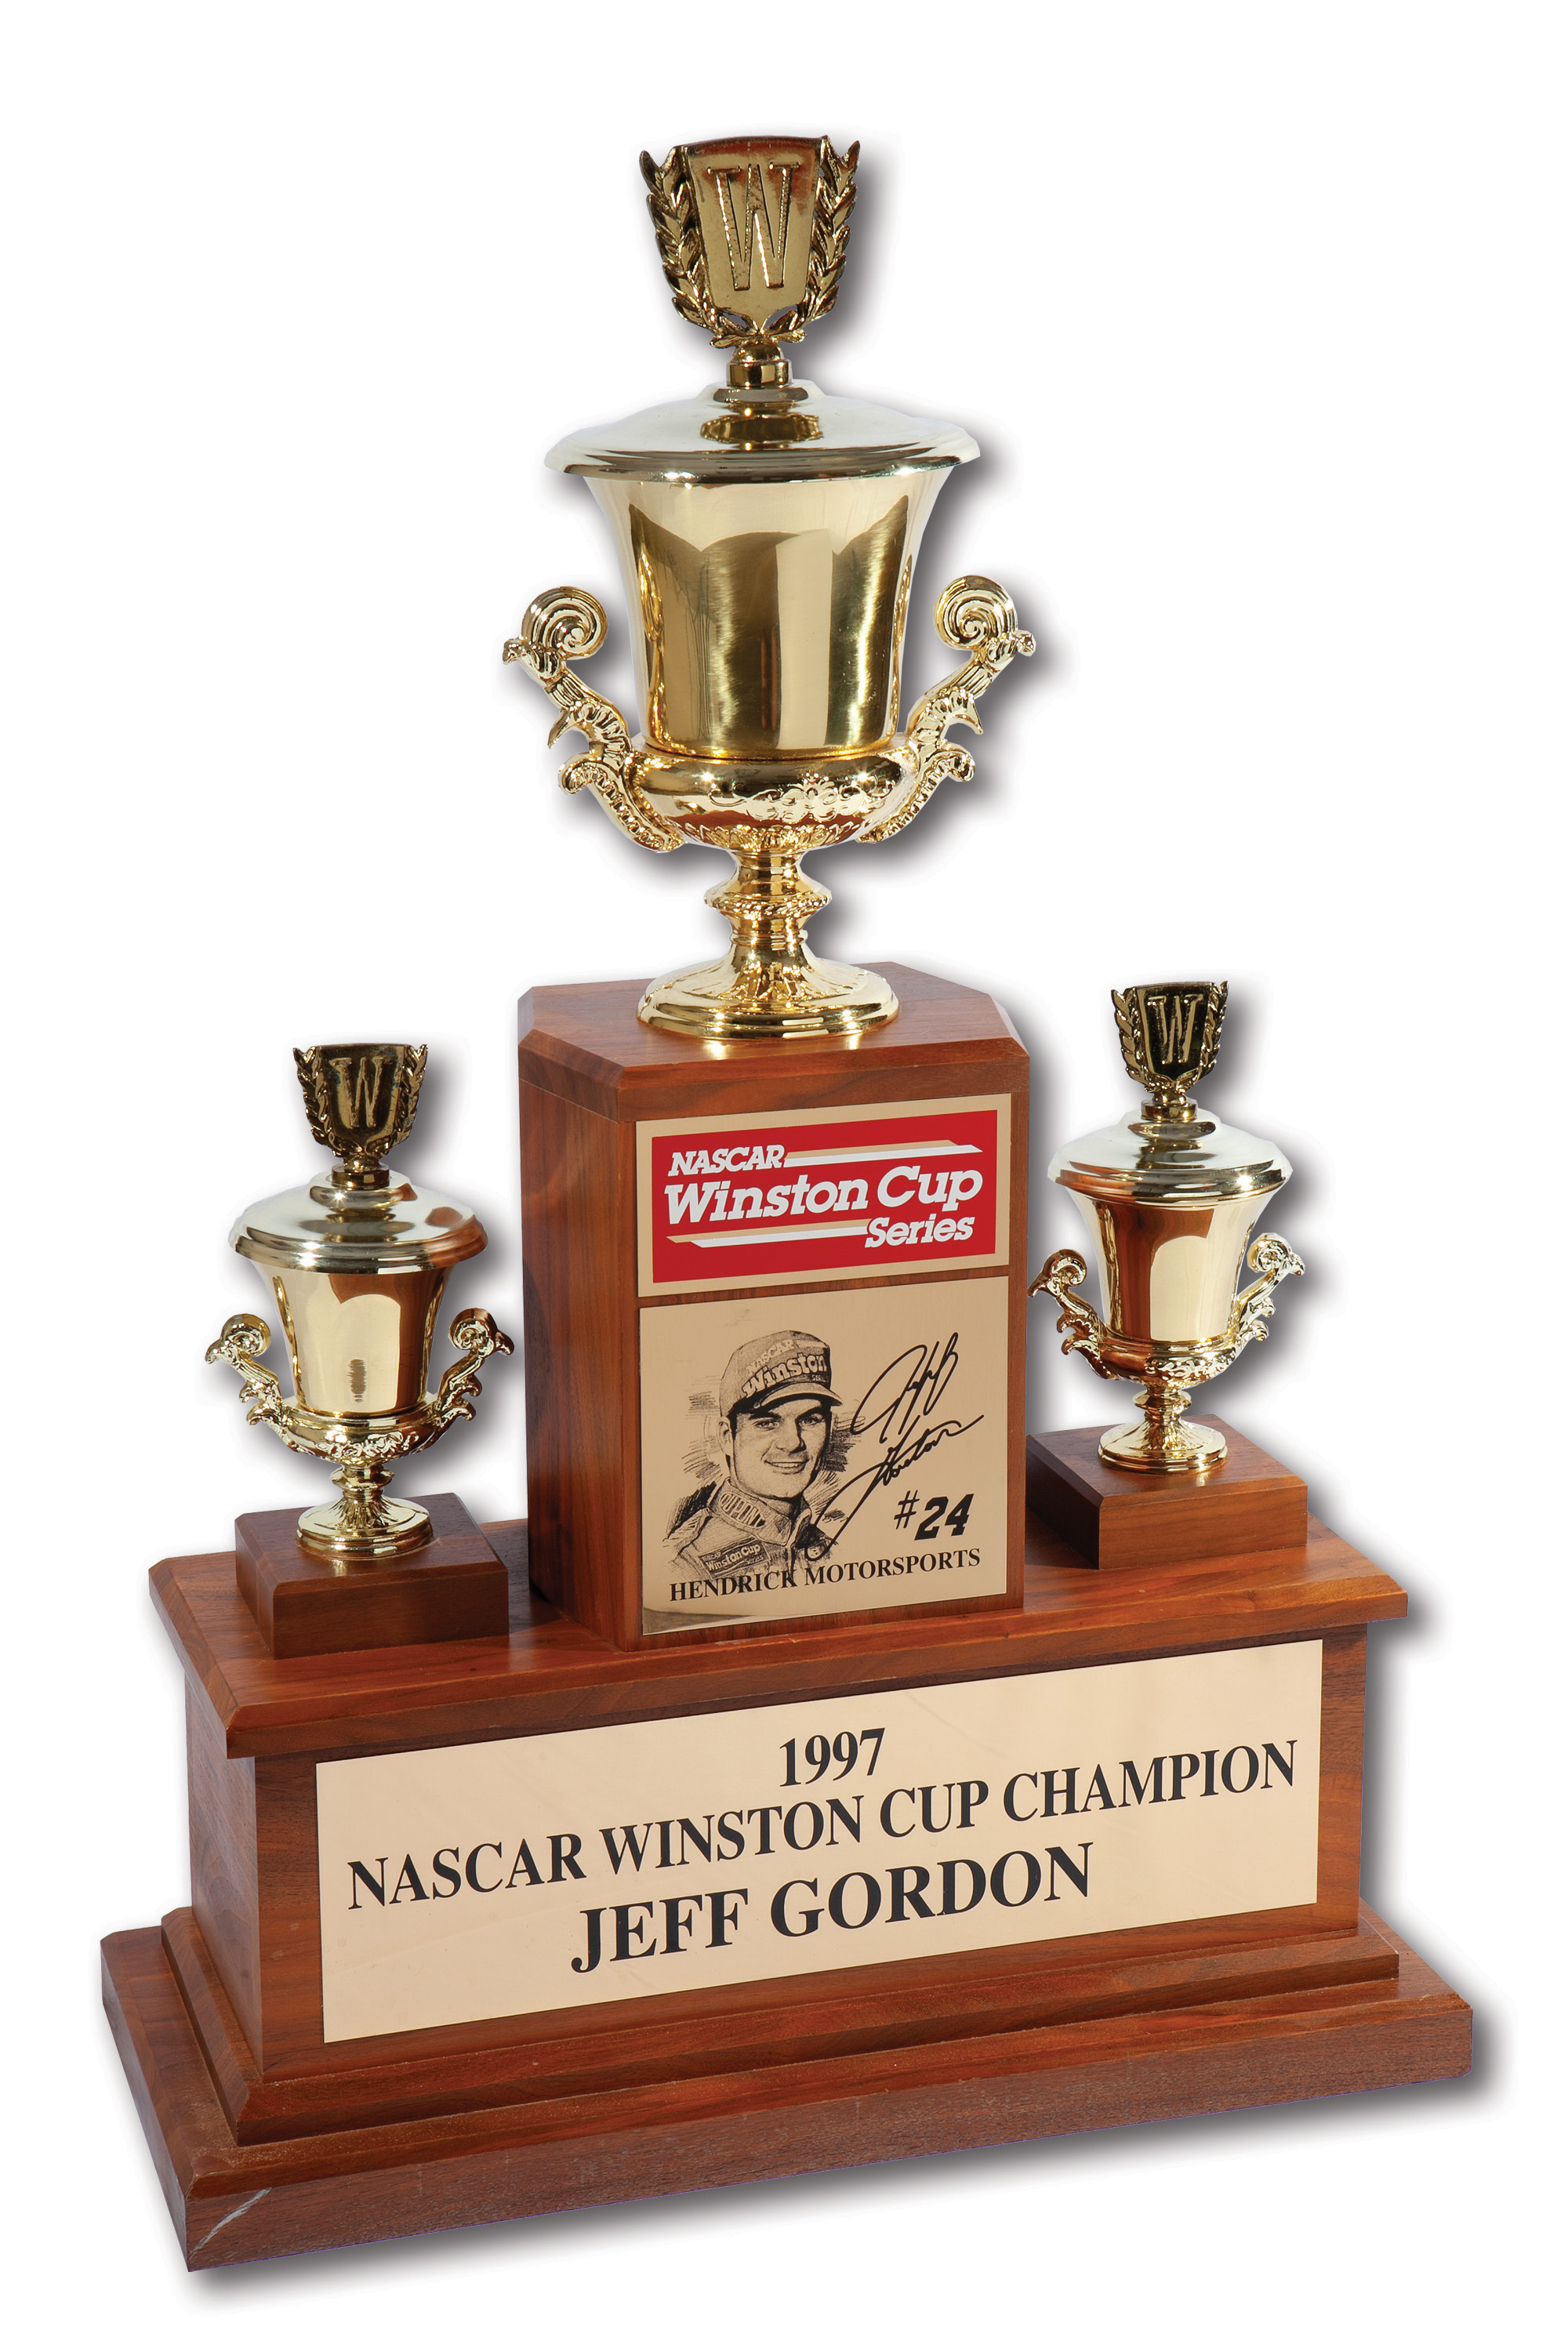 Nascar winston cup trophy